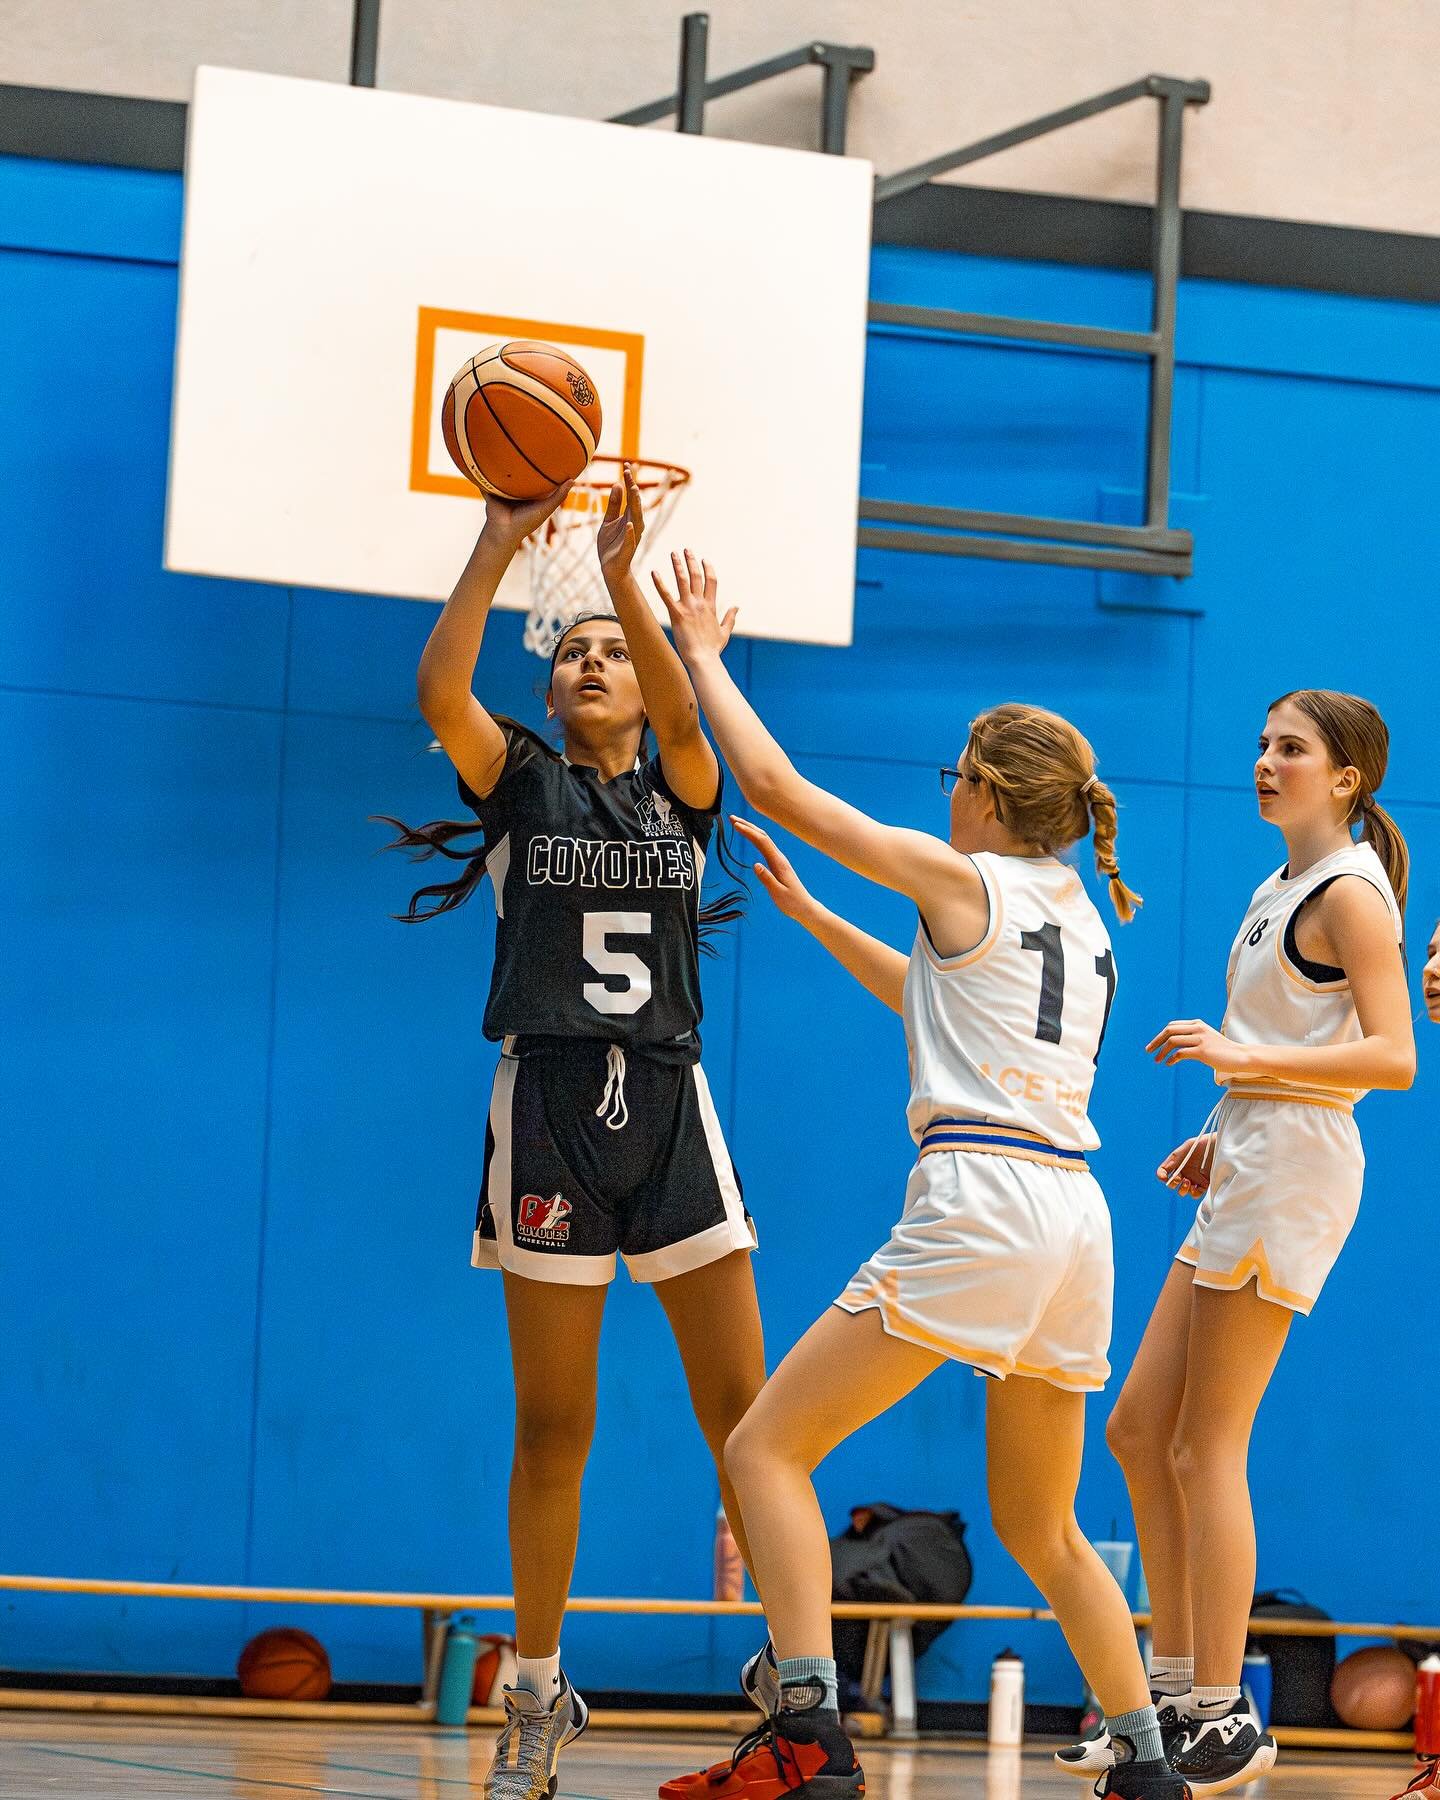 U14 Girls in Penticton 

📸 @itsraidenphotography 

#basketball #games #penticton #compete #u14girls #hustle #juniorcoyotesbasketball